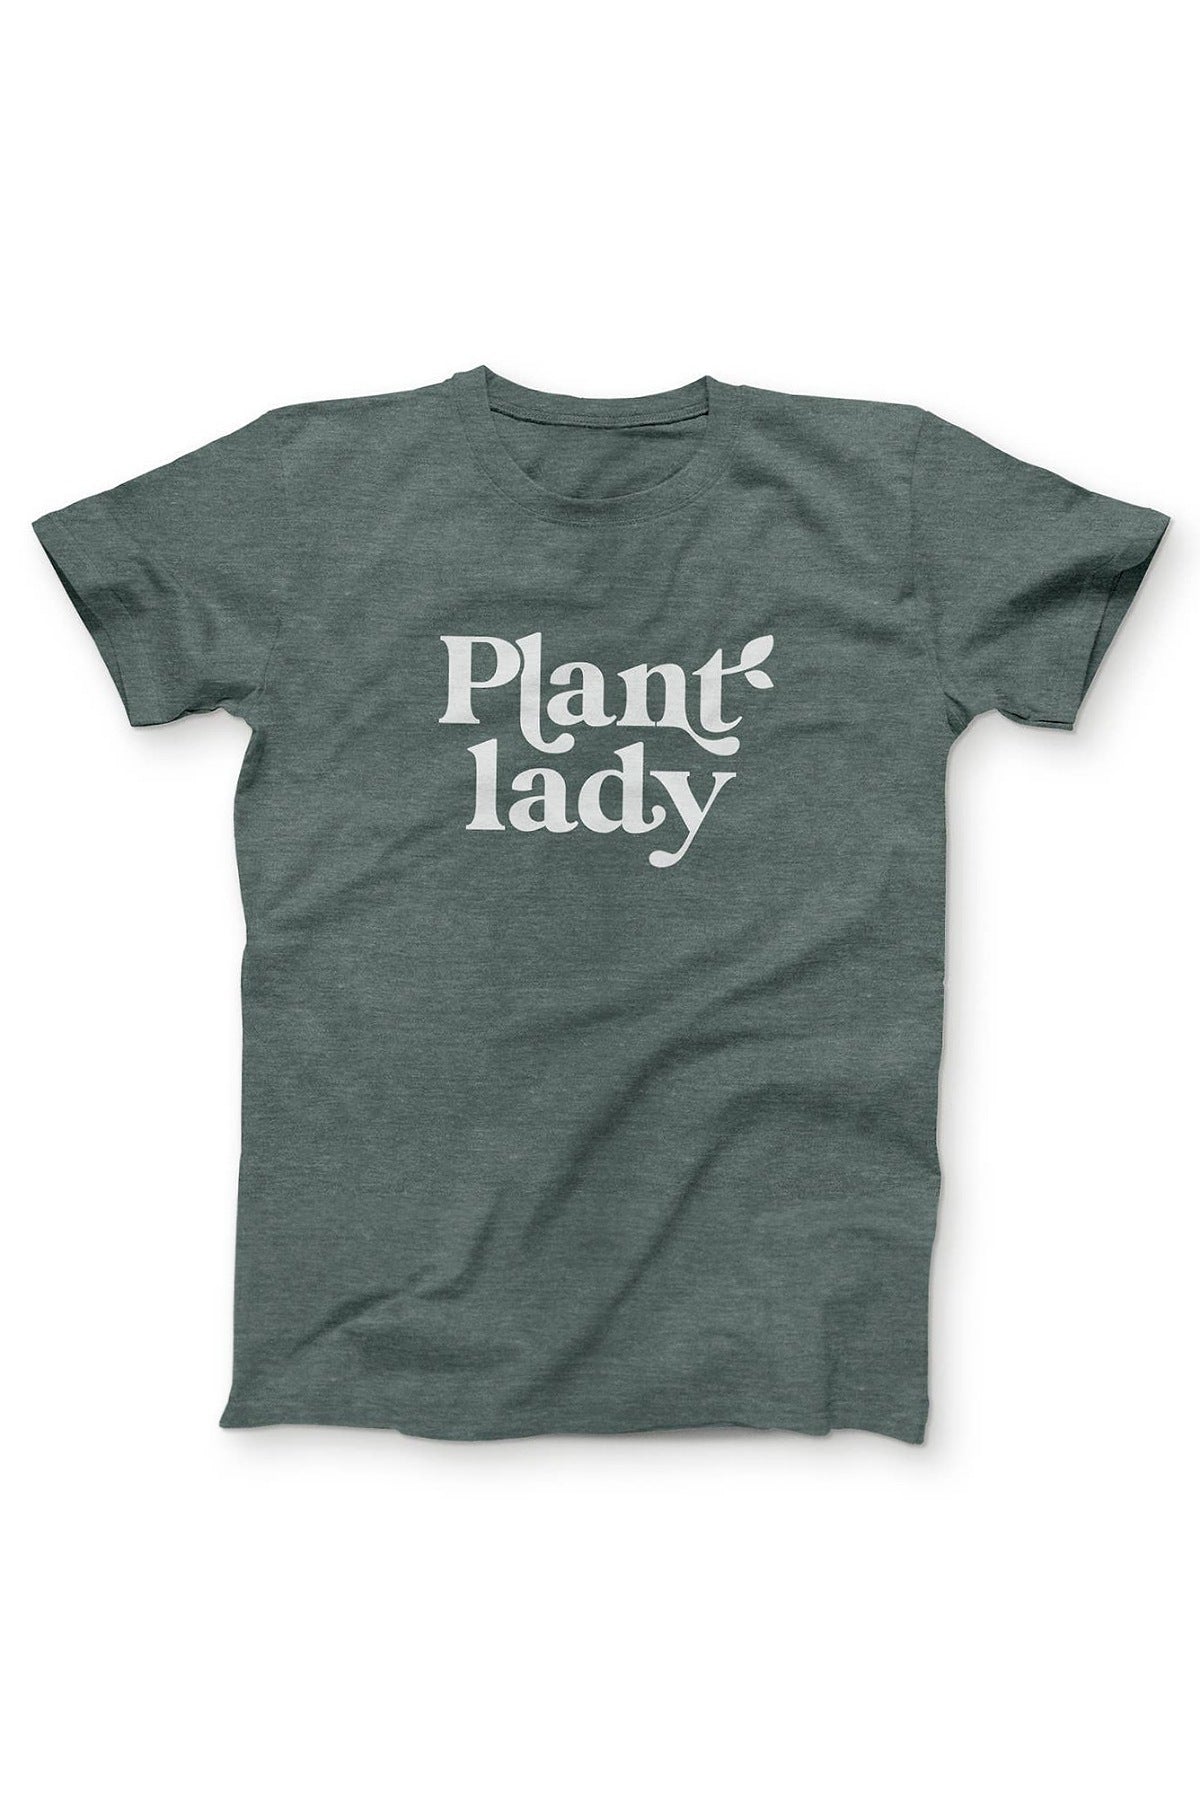 Plant Lady Tee Shirt